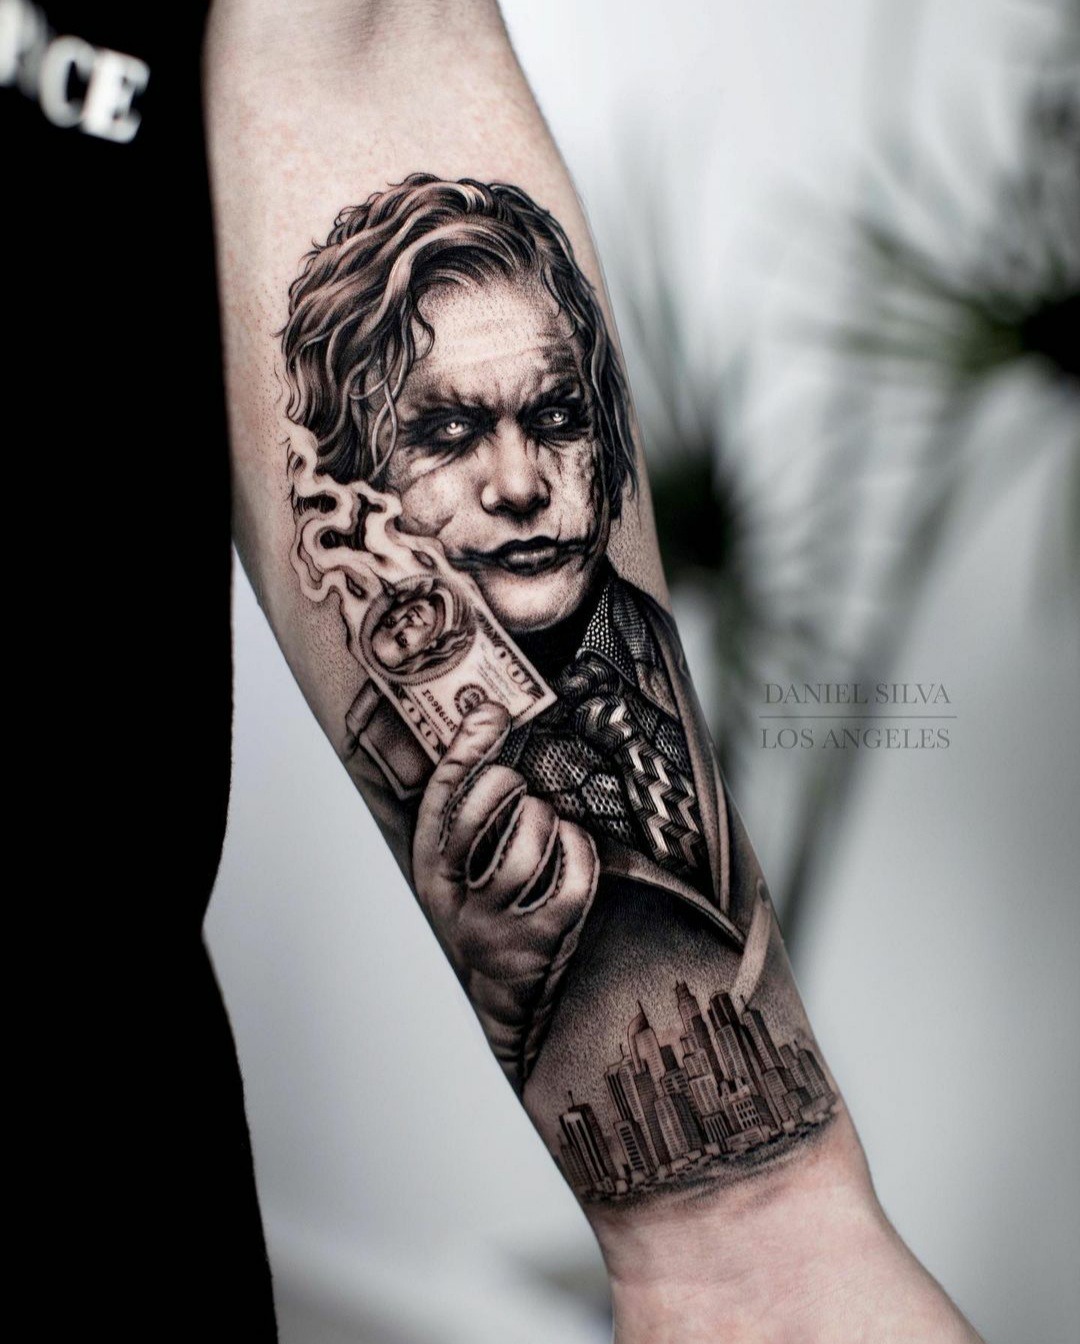 Heath Ledger Joker Tattoo by ravenwarlock on DeviantArt